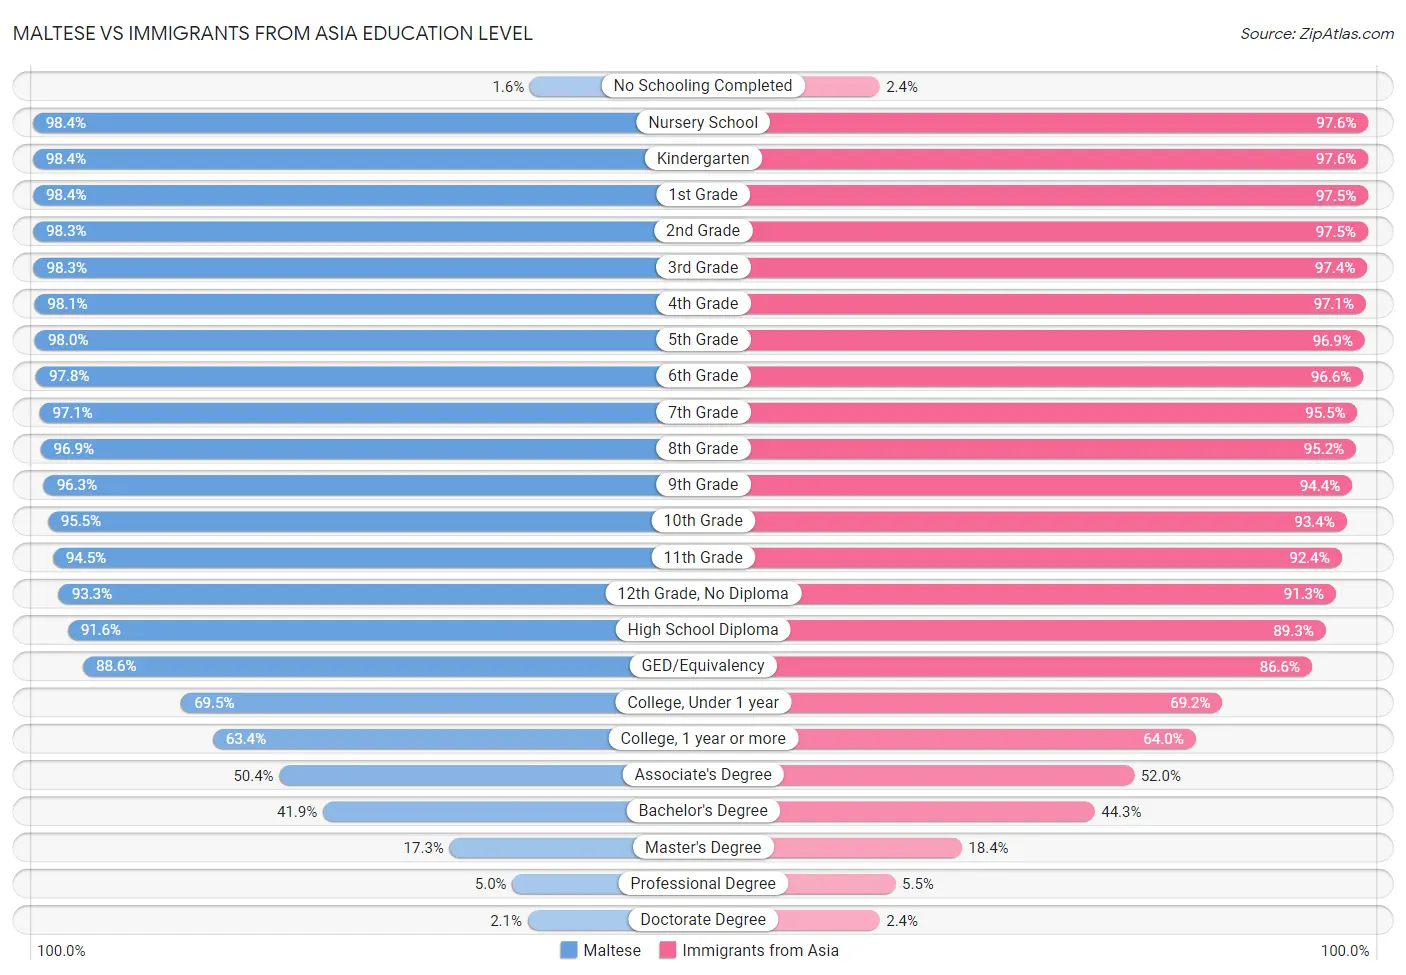 Maltese vs Immigrants from Asia Education Level